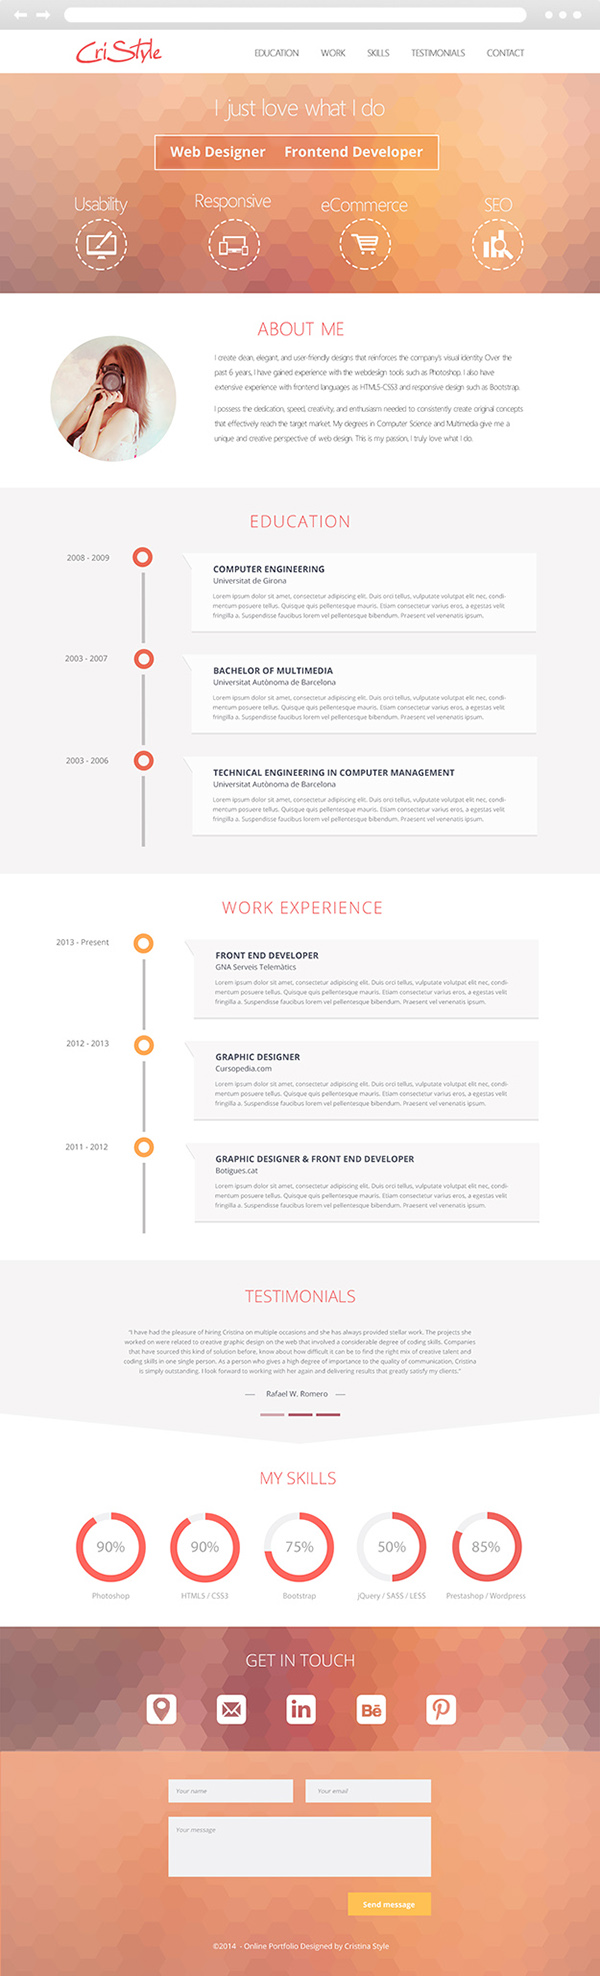 Resume Webdesign flat creative orange timeline progressbars UI One Page one page site One Page template Self Promotion Responsive Responsive Design portfolio